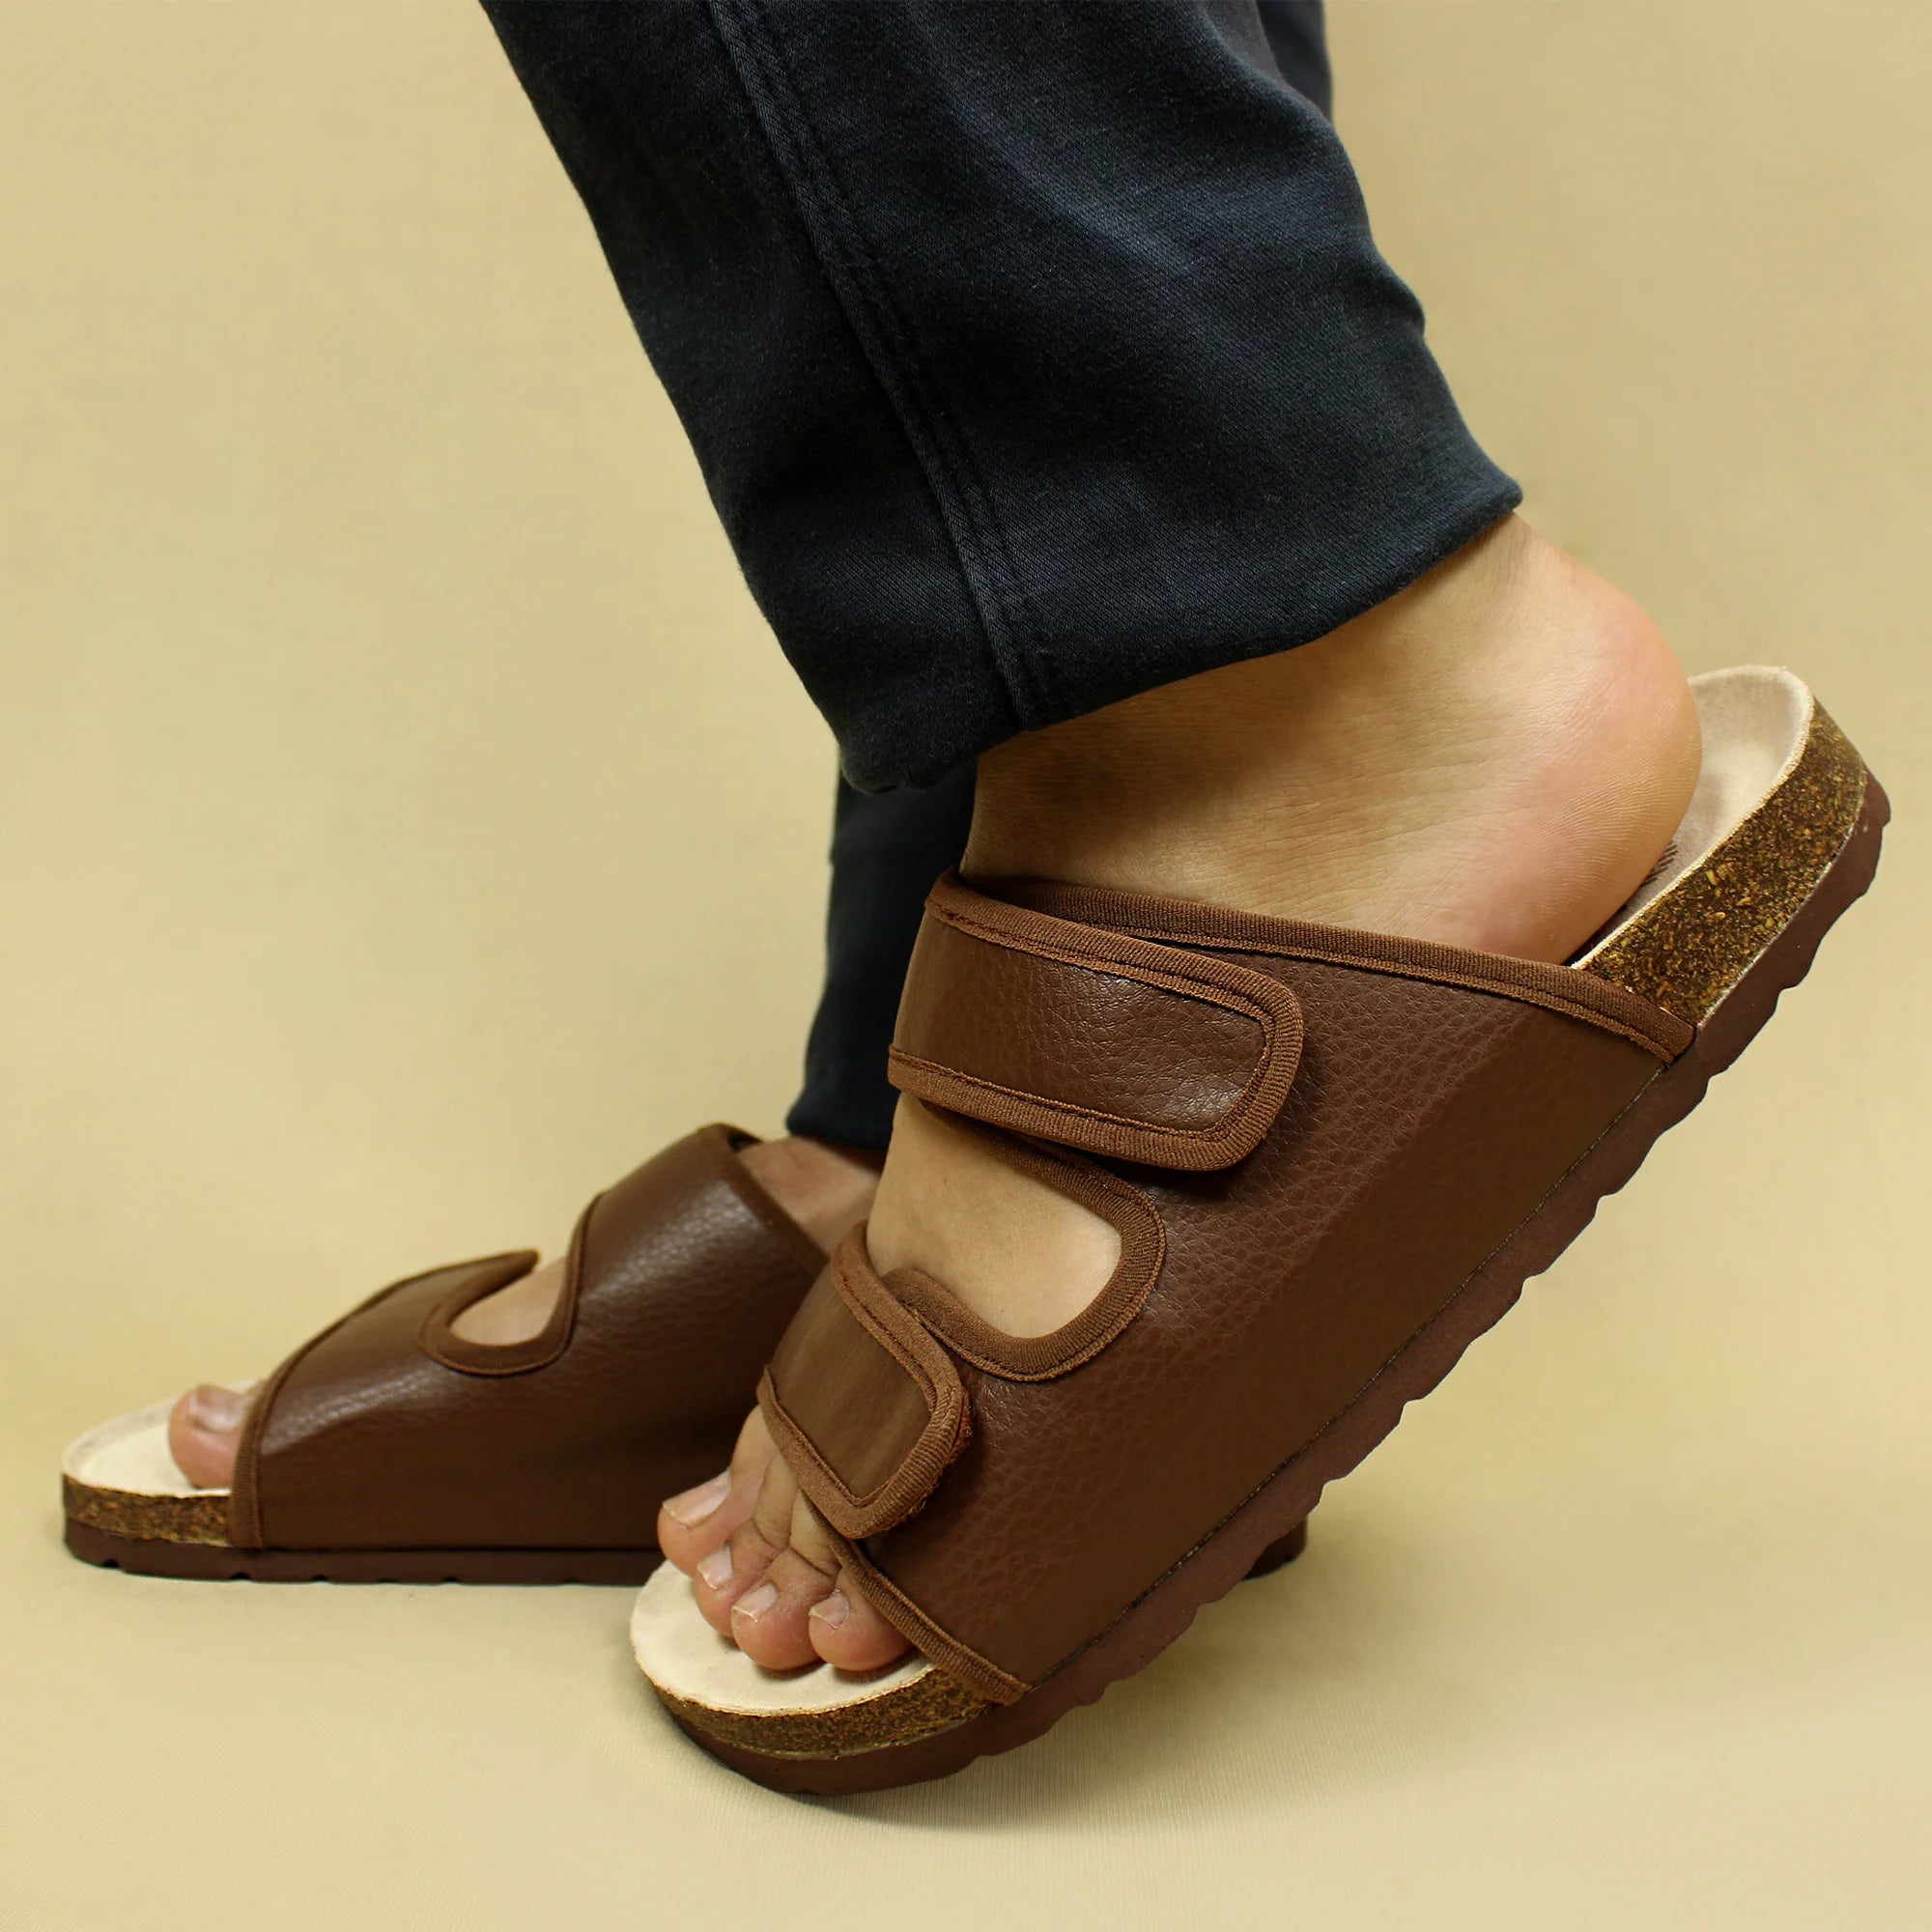 Buy Men Black Casual Sandals Online | SKU: 18-149-11-40-Metro Shoes